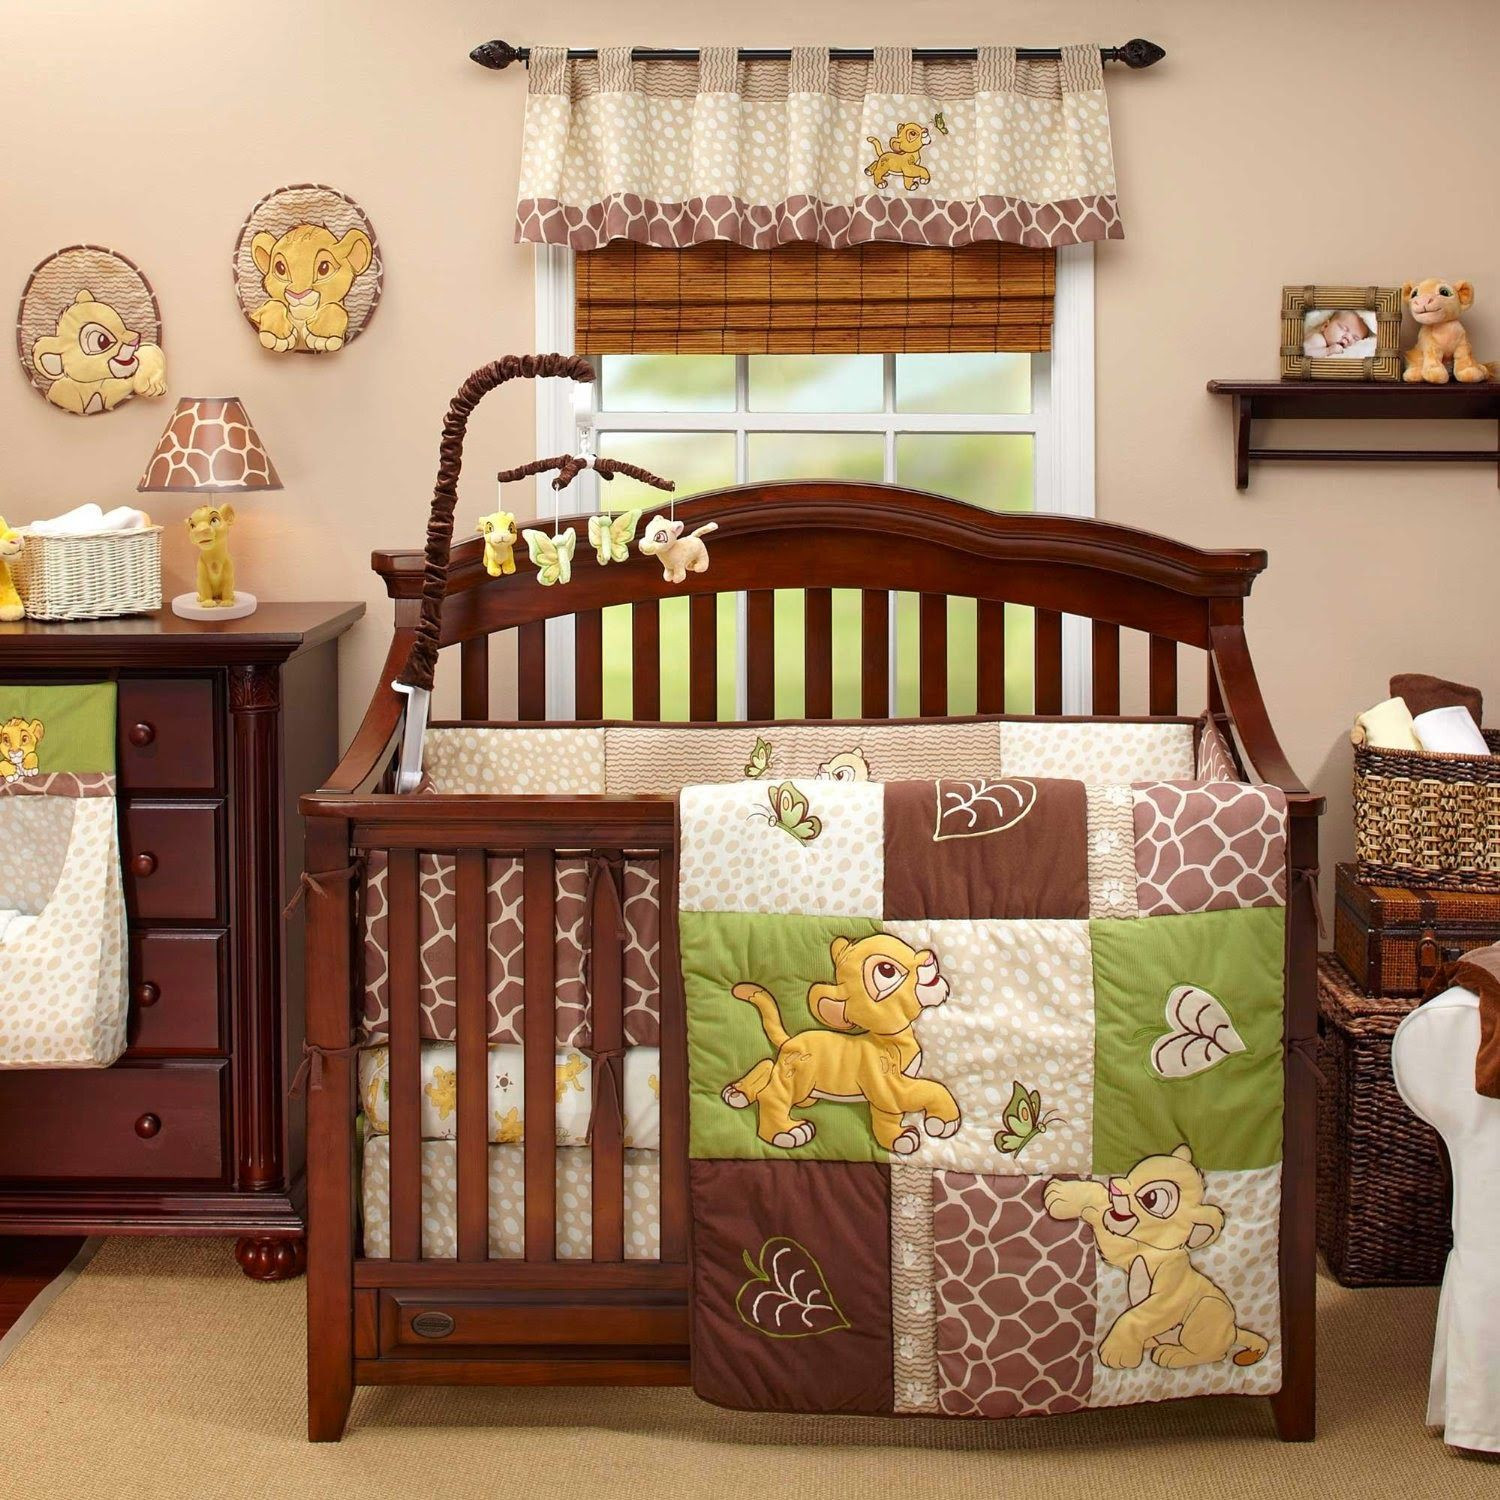 Baby Crib Decor
 Lion King Baby Nursery Decor and Crib Sets